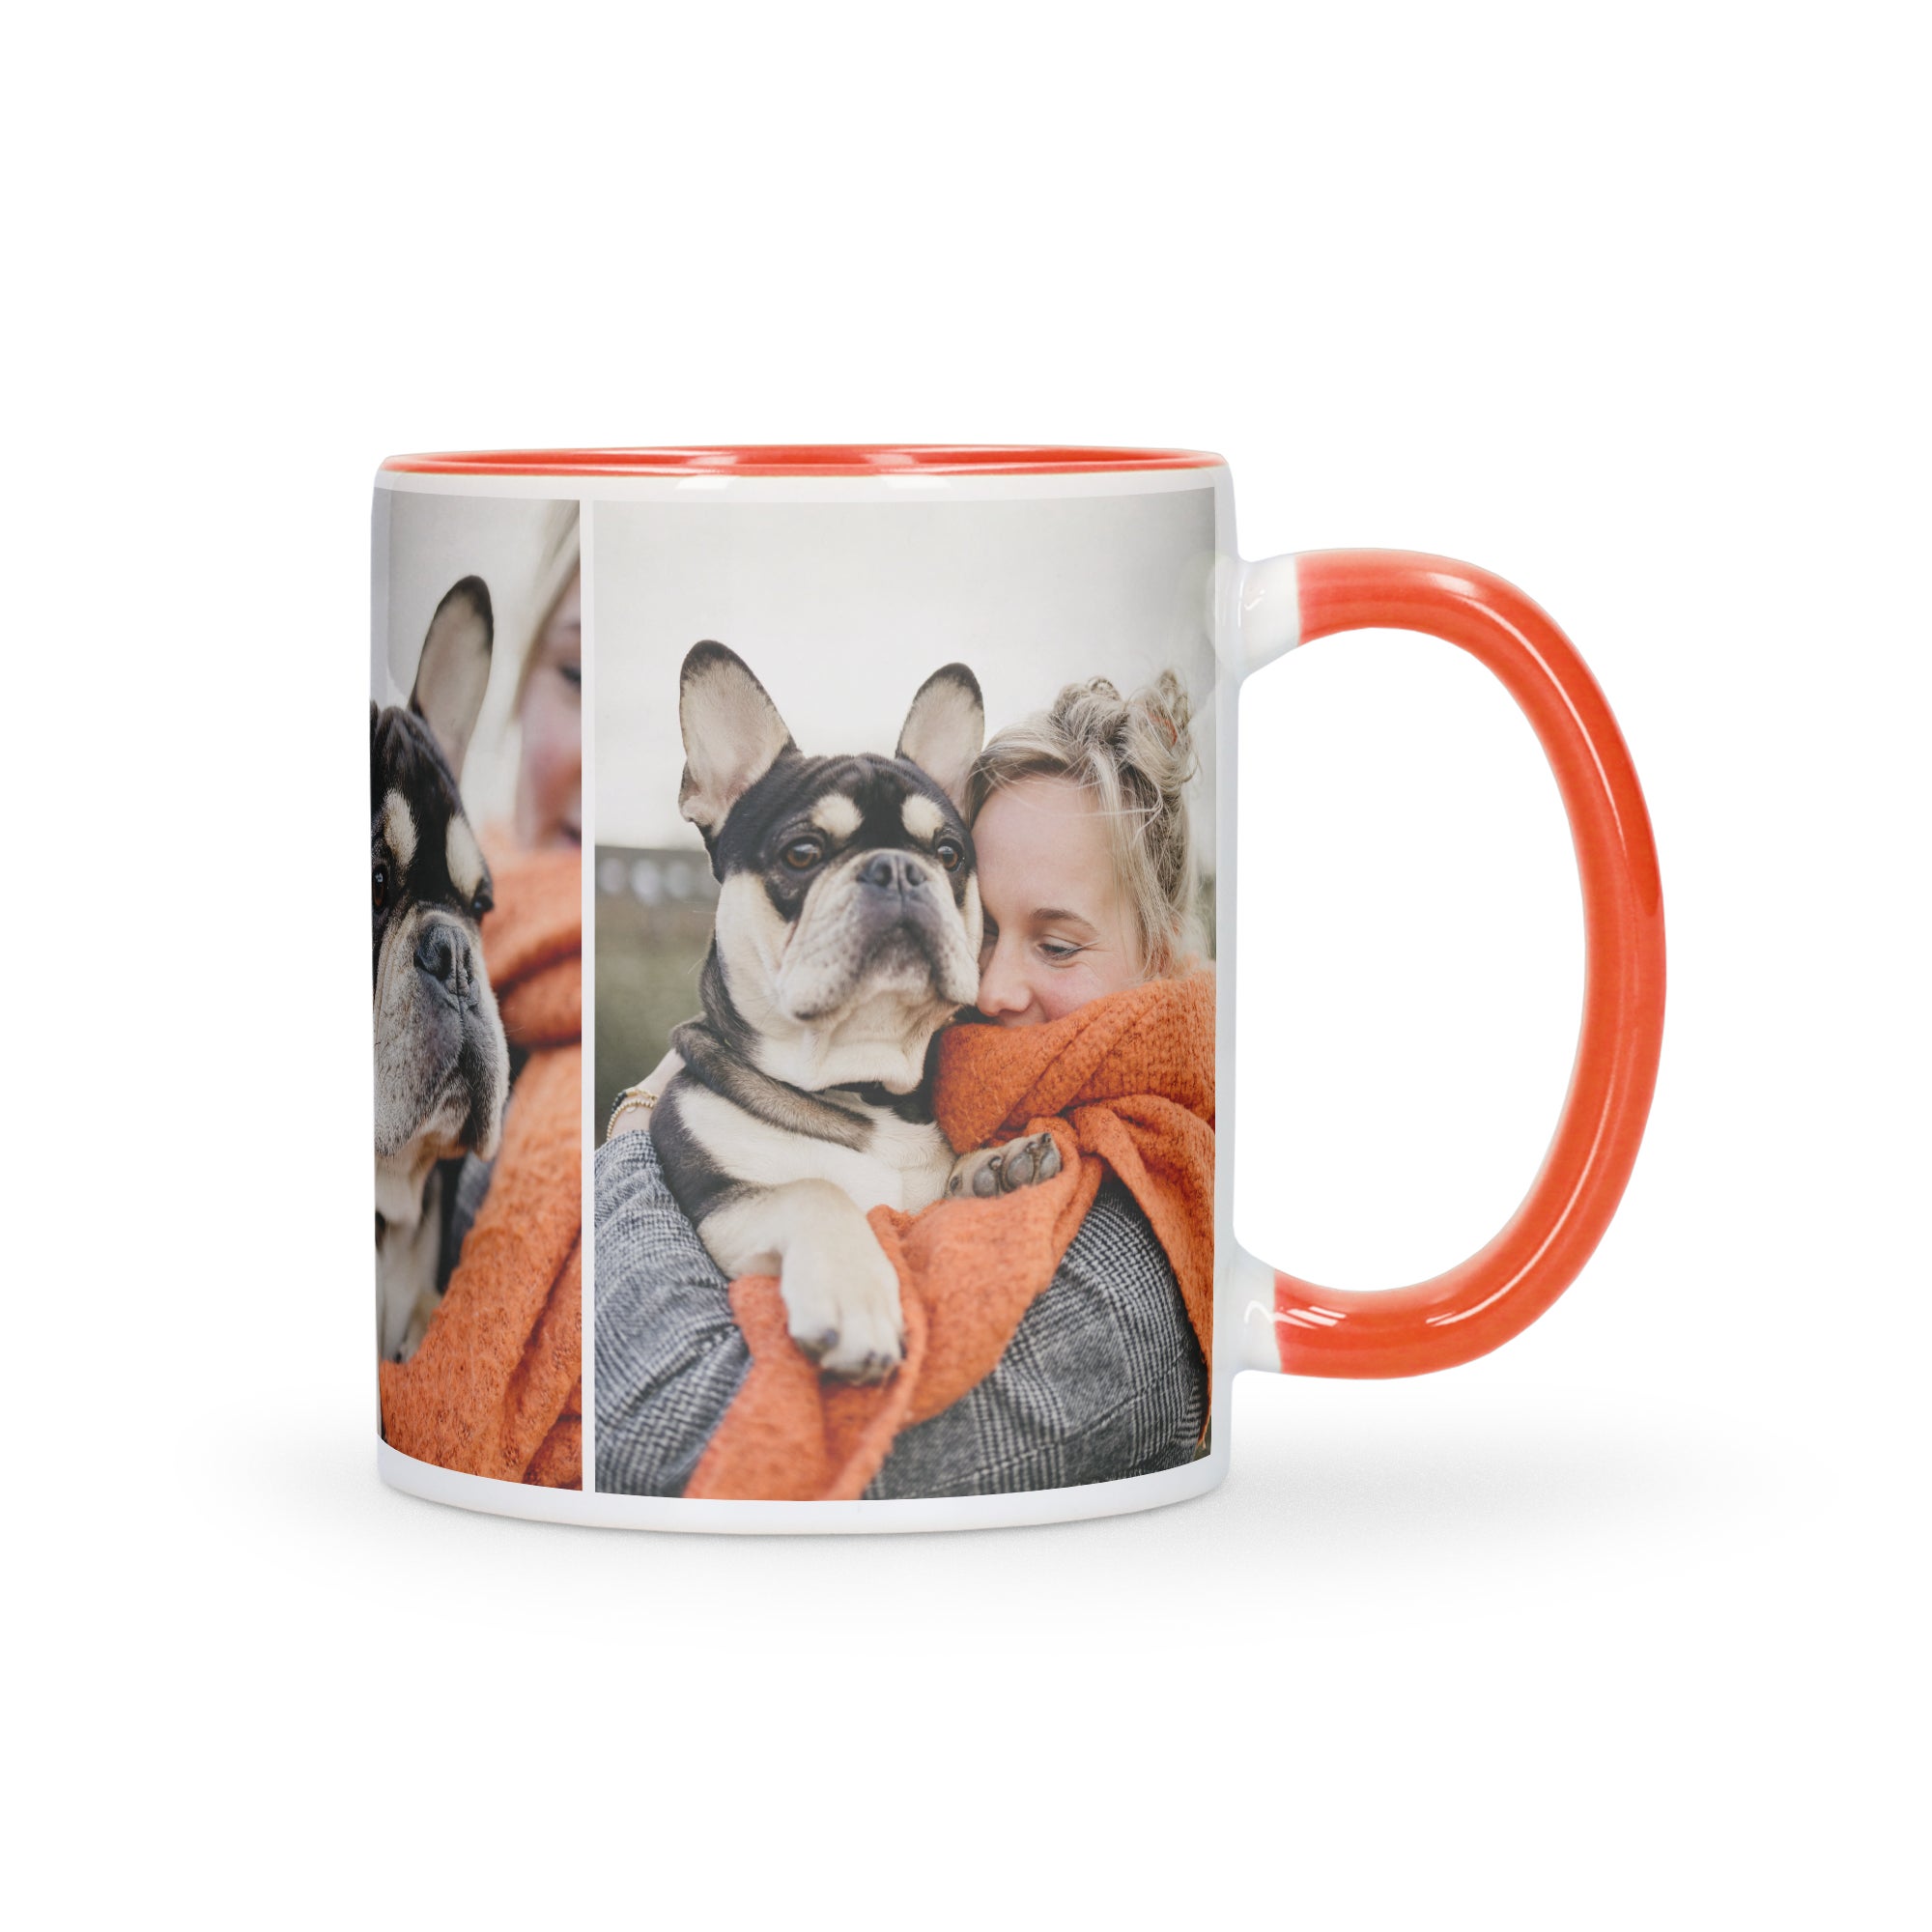 Personalised Mug - Orange